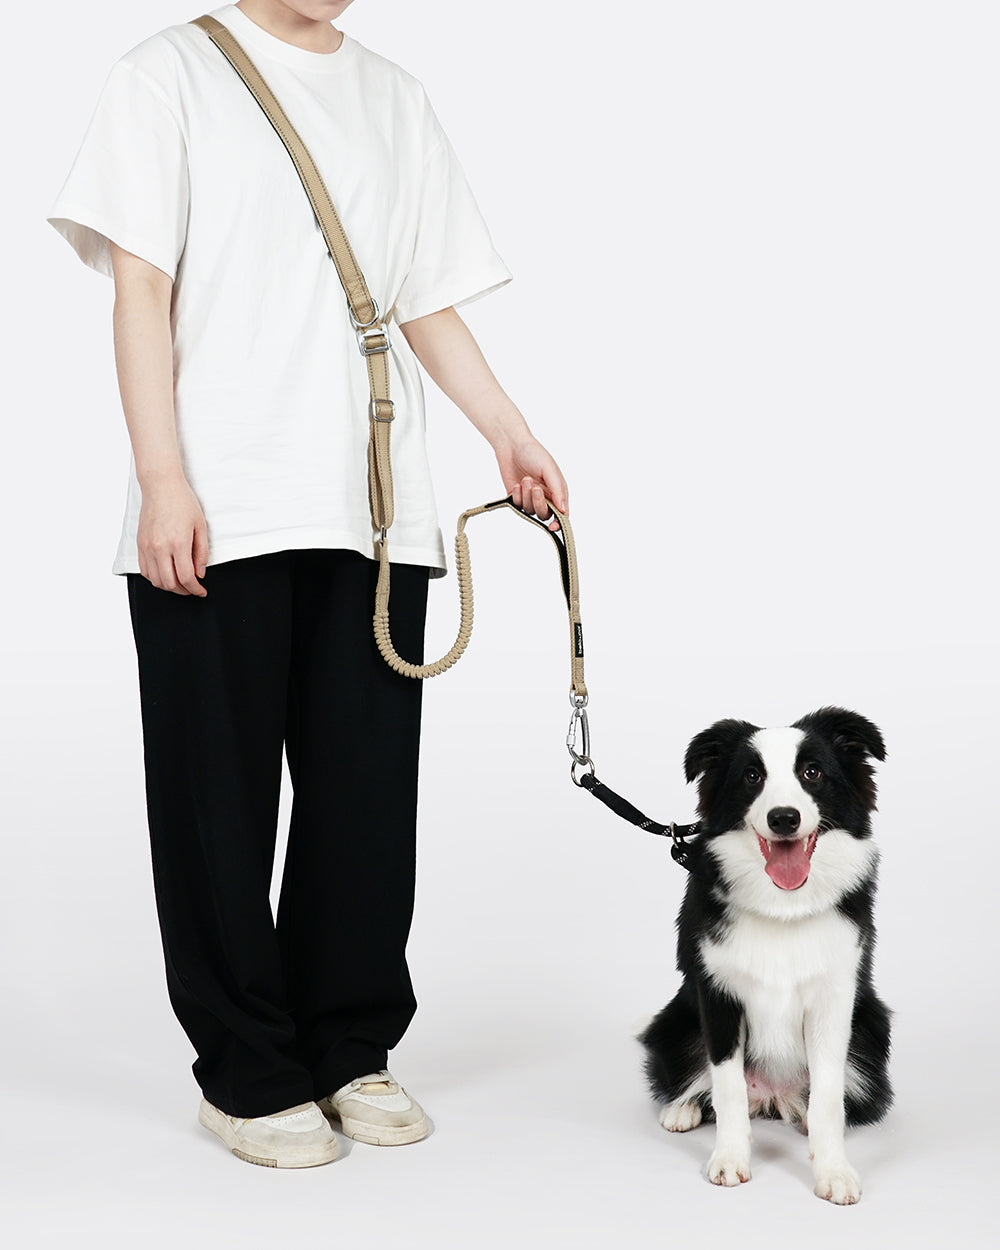 All-Metal Multifunctional Hands-Free Dog Leash - British Khaki